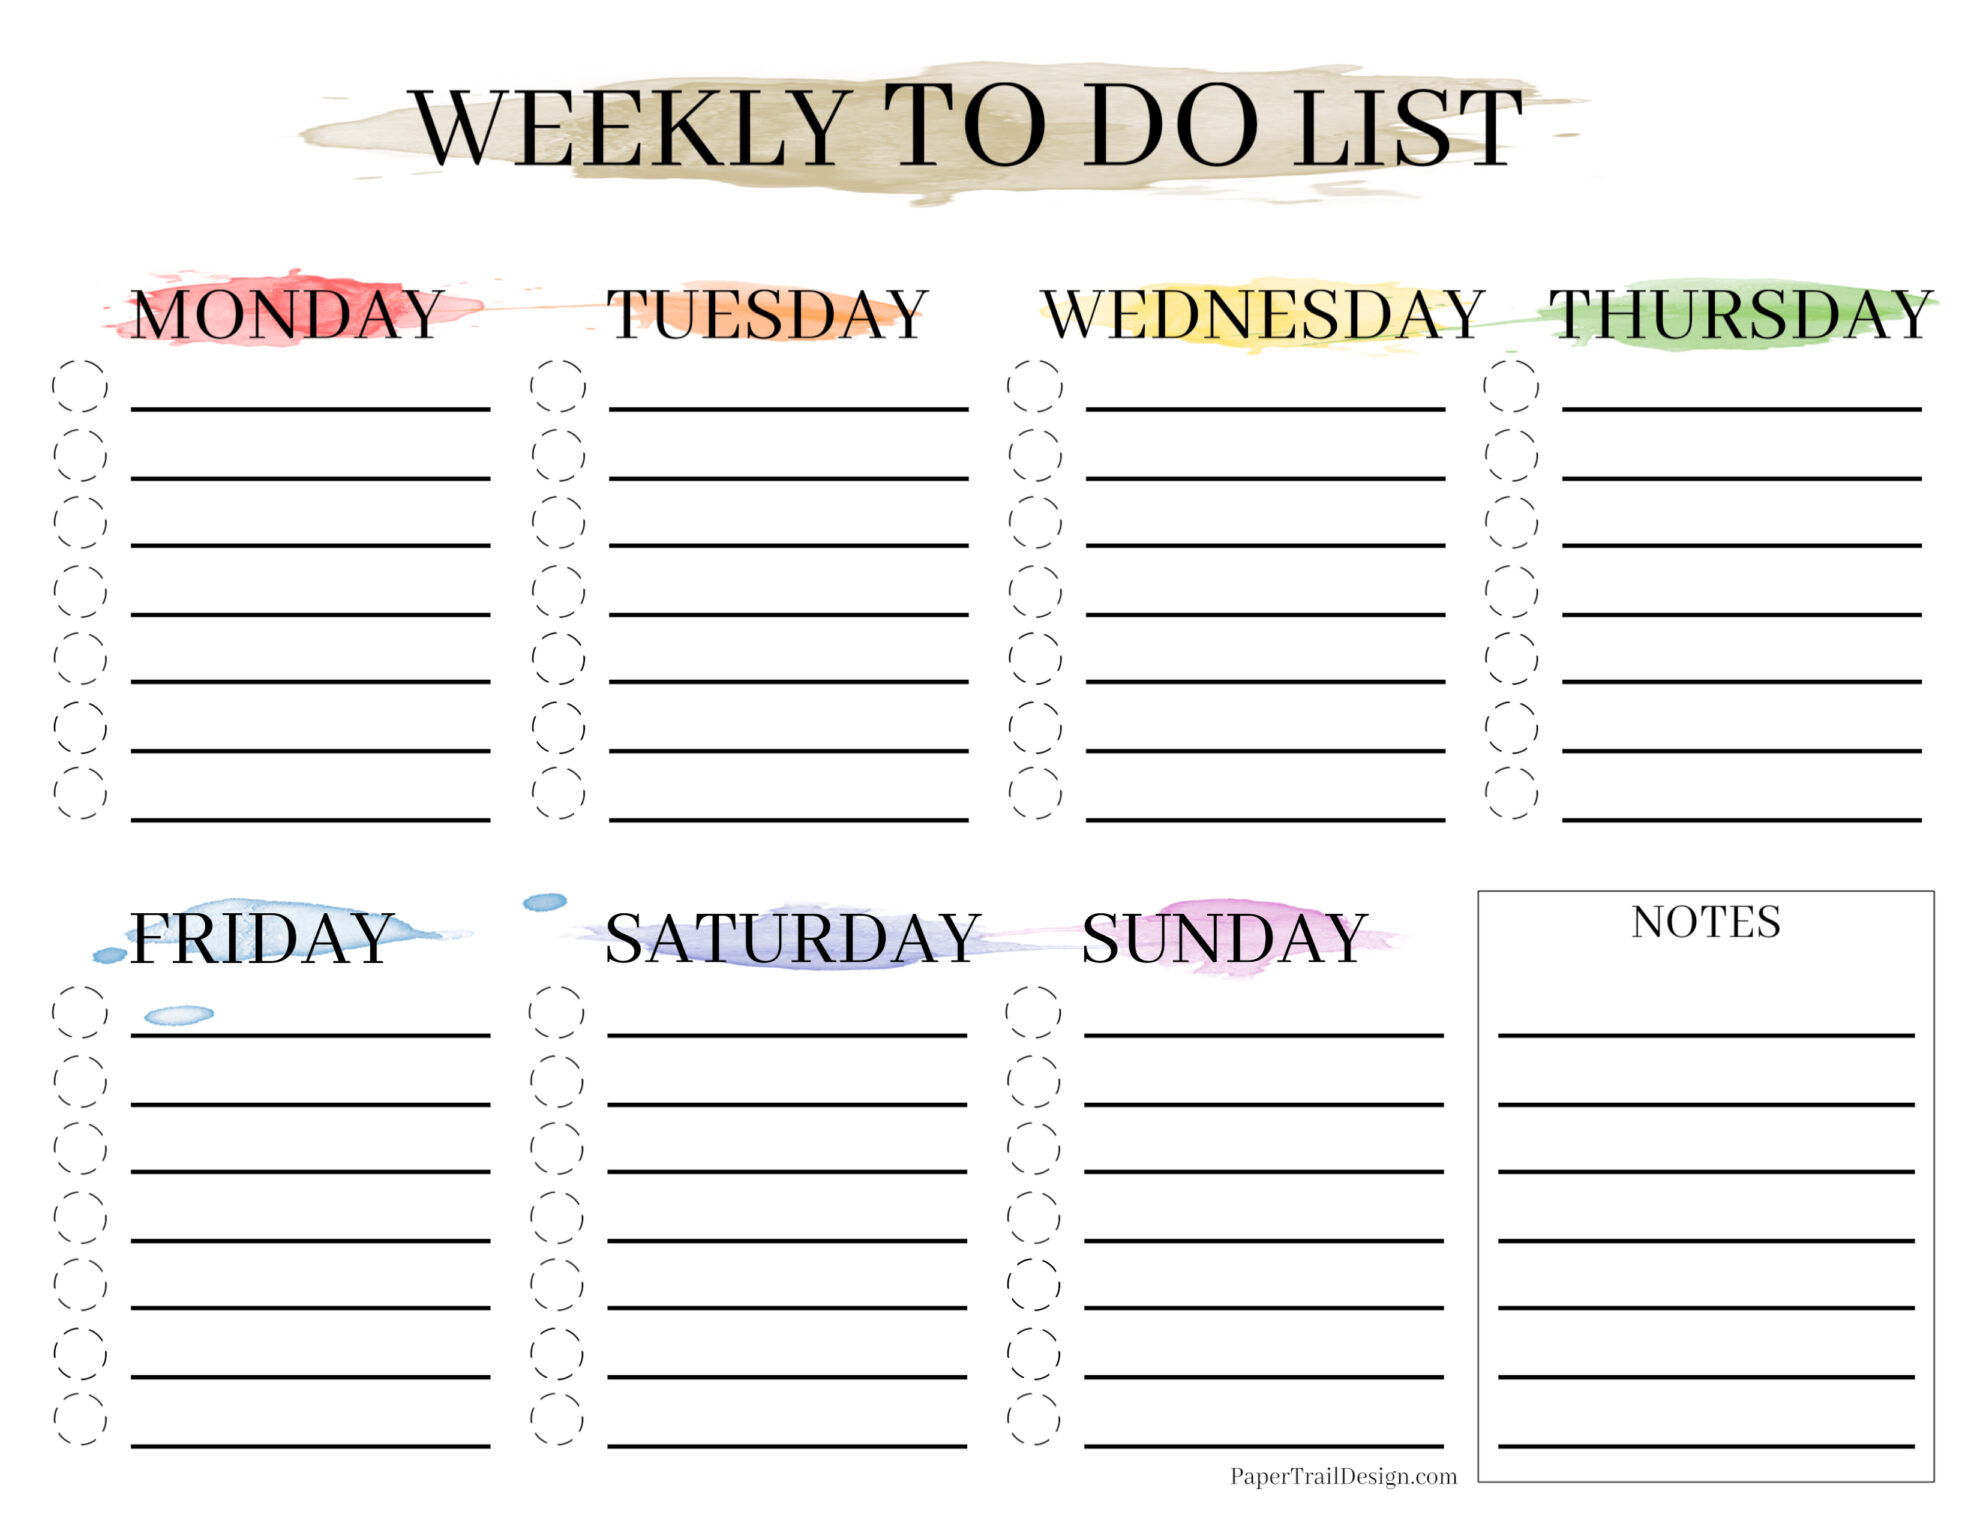 paper-party-supplies-calendars-planners-paper-tasks-list-template